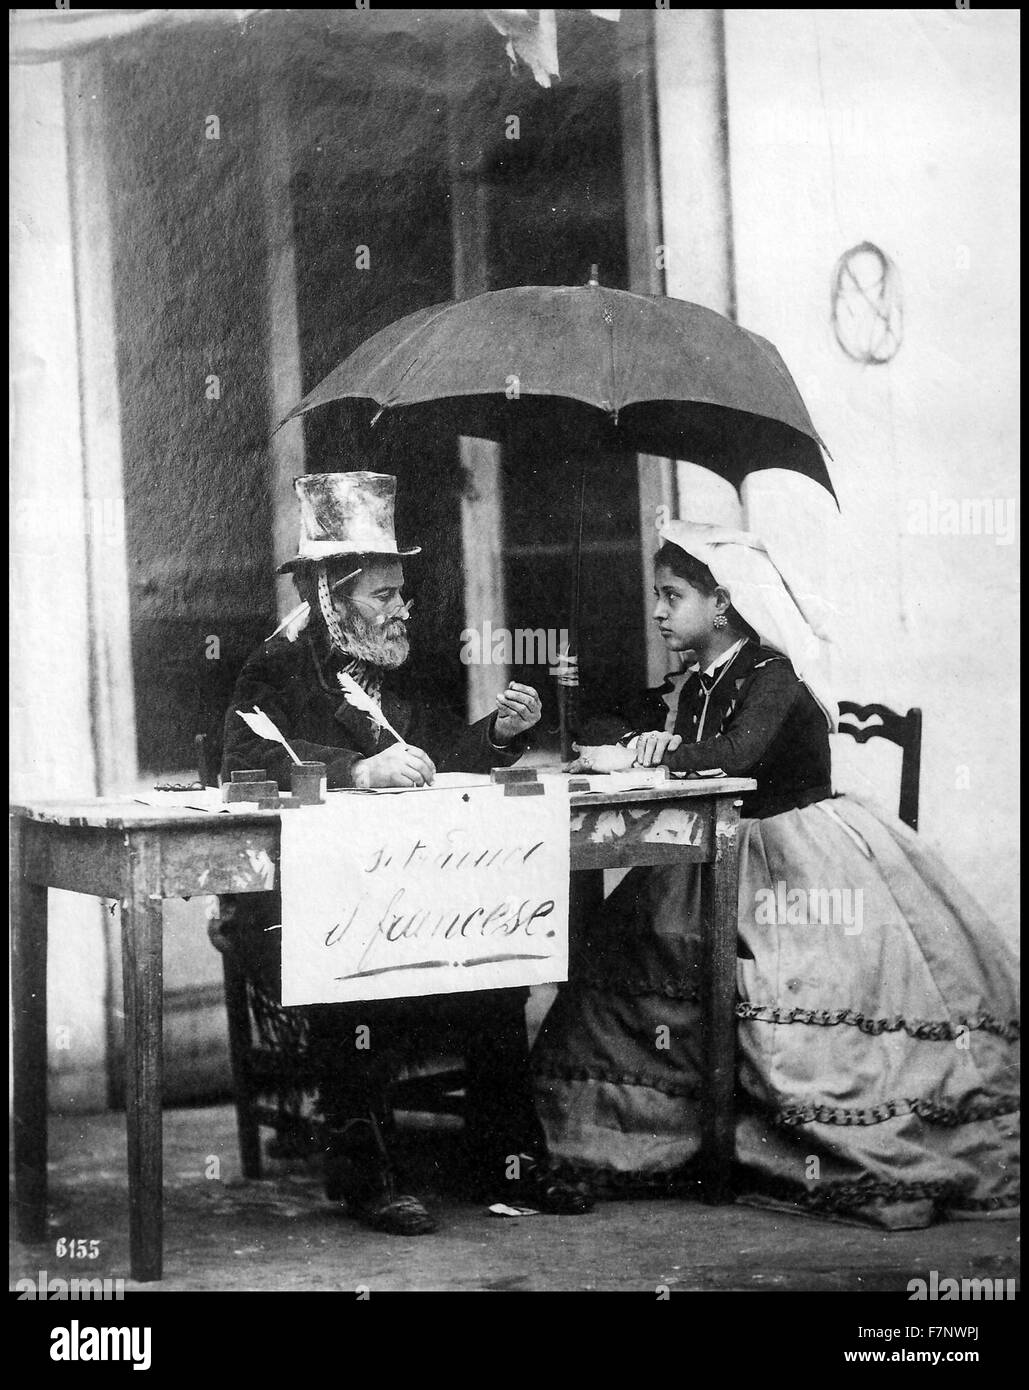 Giorgio Sommer, photograph of an Italian public letter writer, 1860. Stock Photo